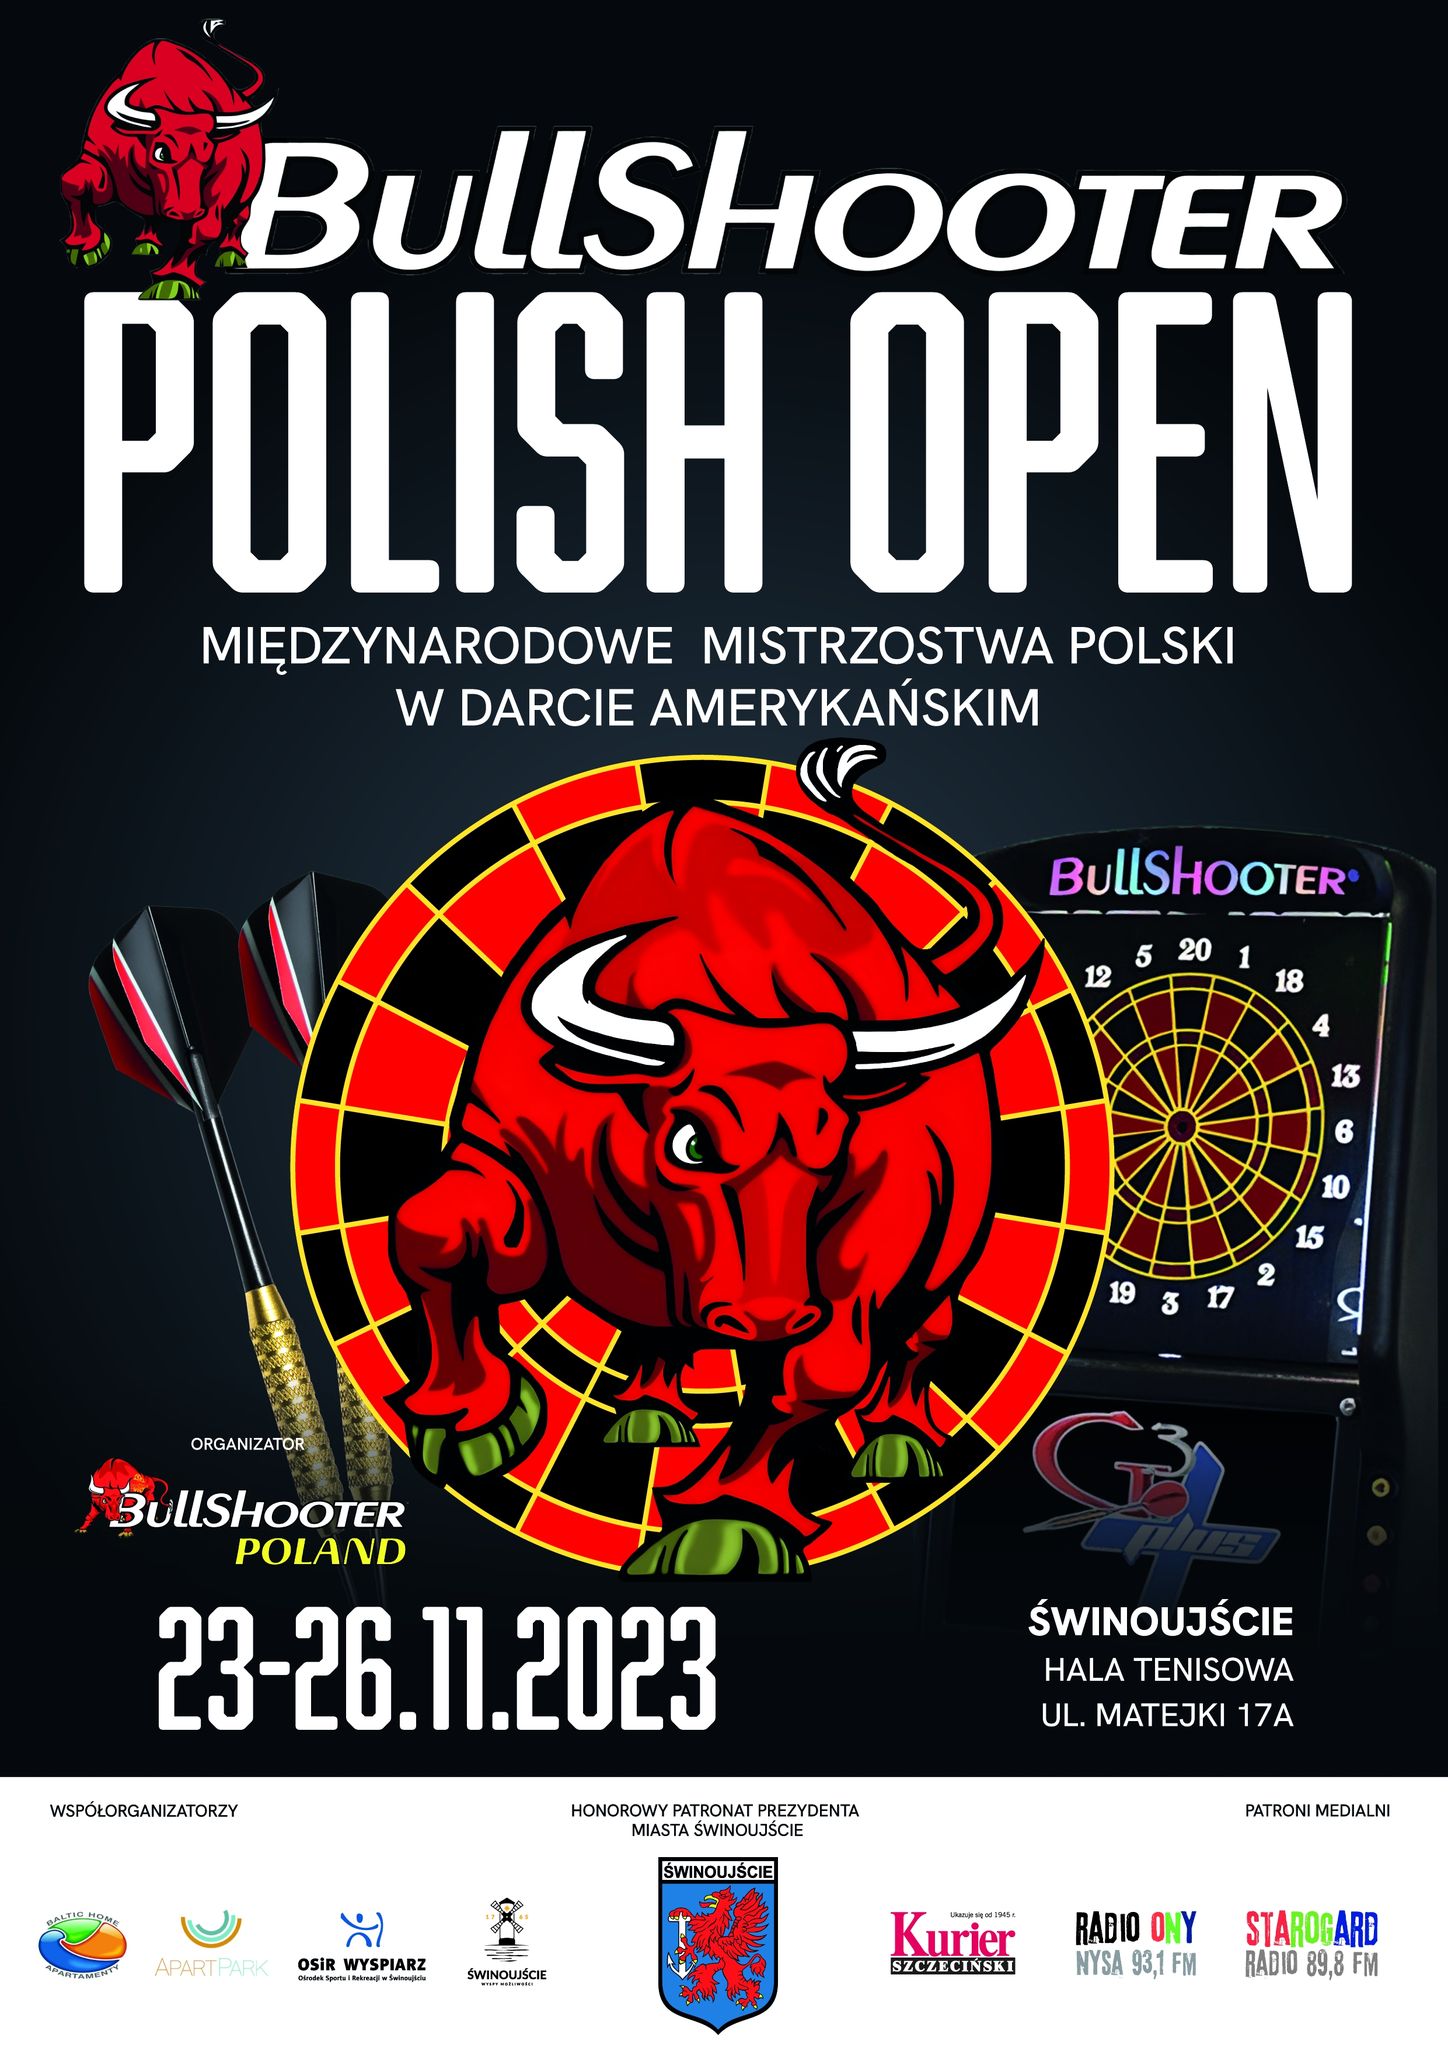 Next Tournaments Bullshooter Europe